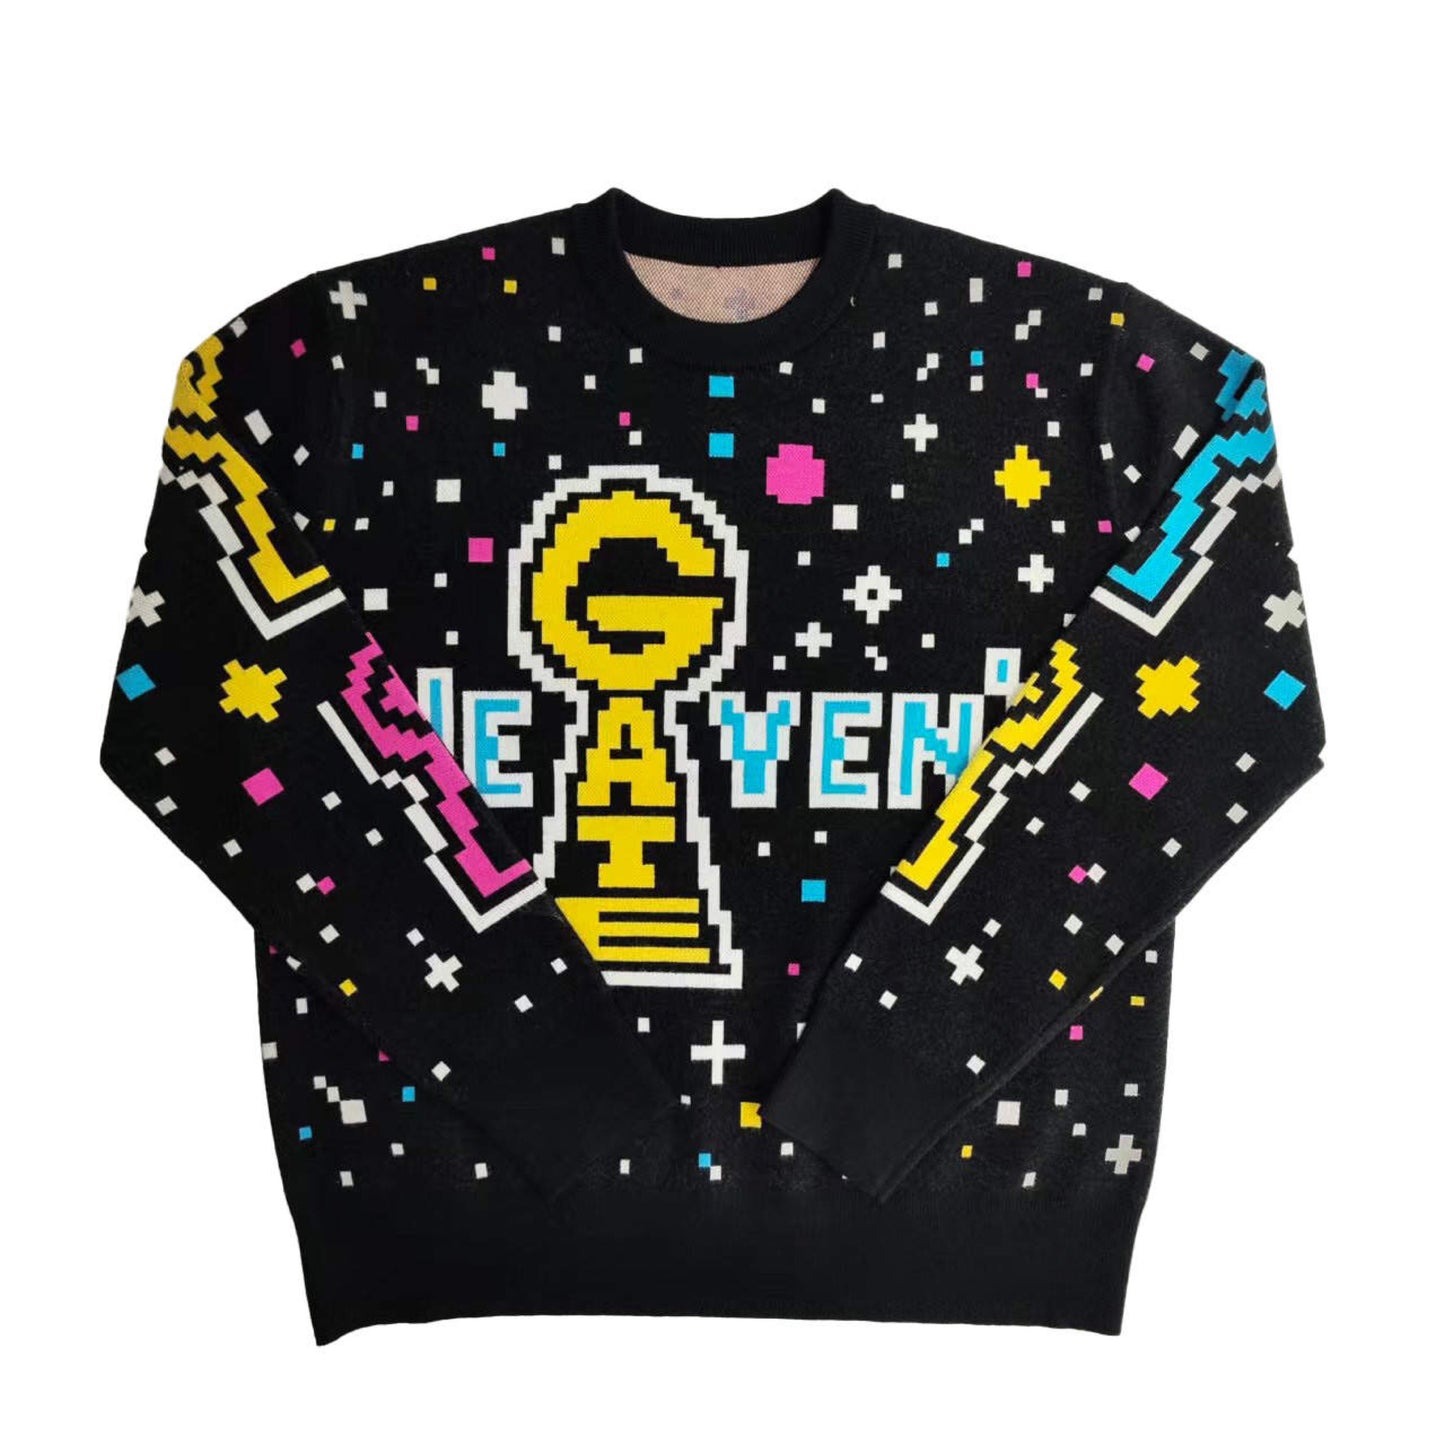 Heaven's Gate Sweater.